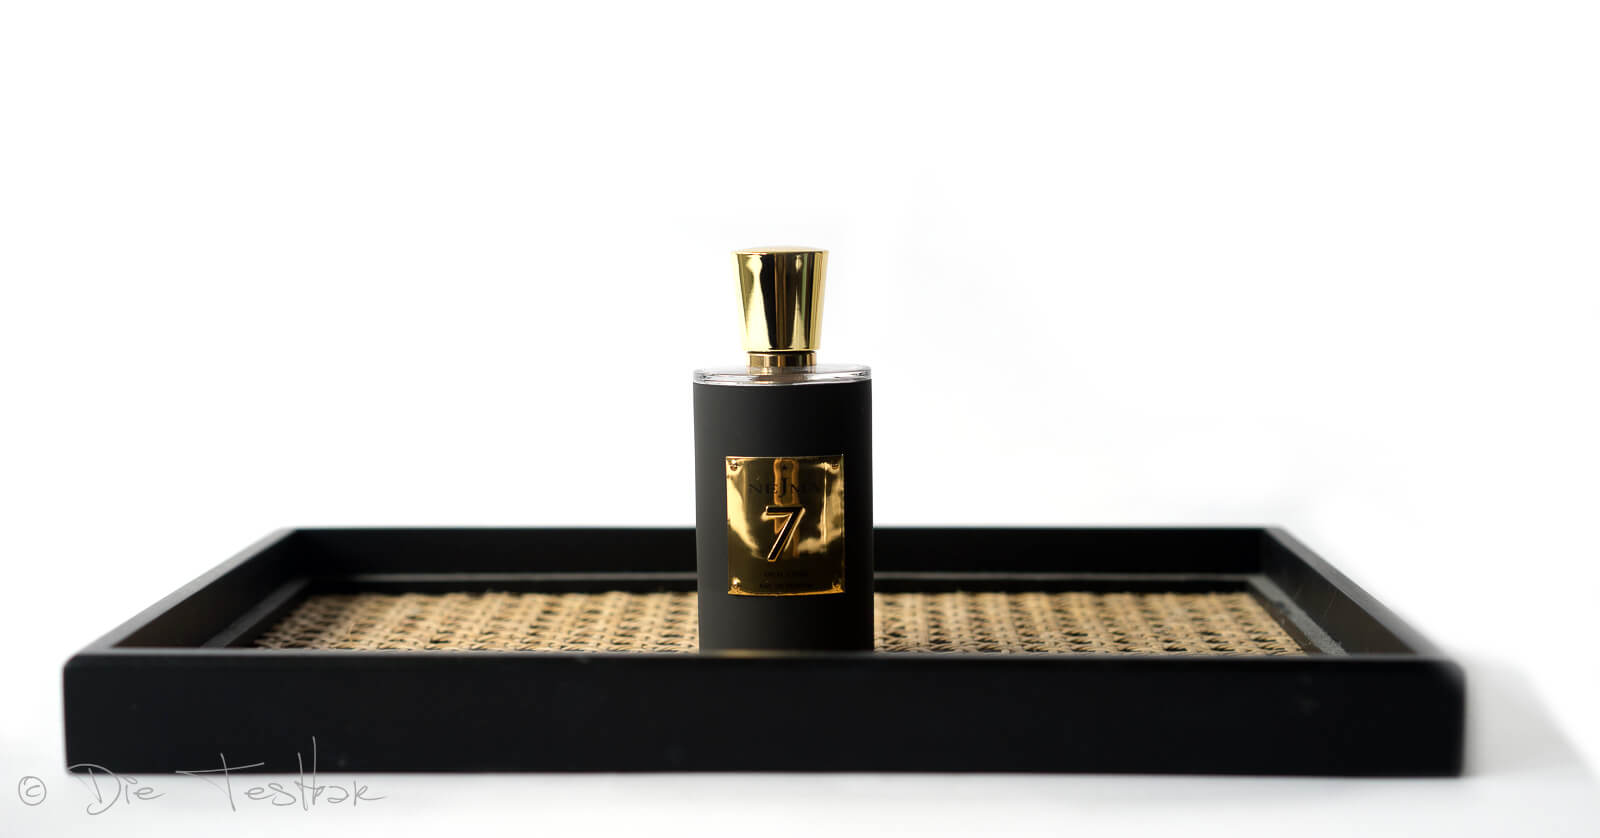 Isis Parfums Diffusion - KoEptYs - Eau de Parfum - Der erste Promi Luxus Duft von Booba by Nejma